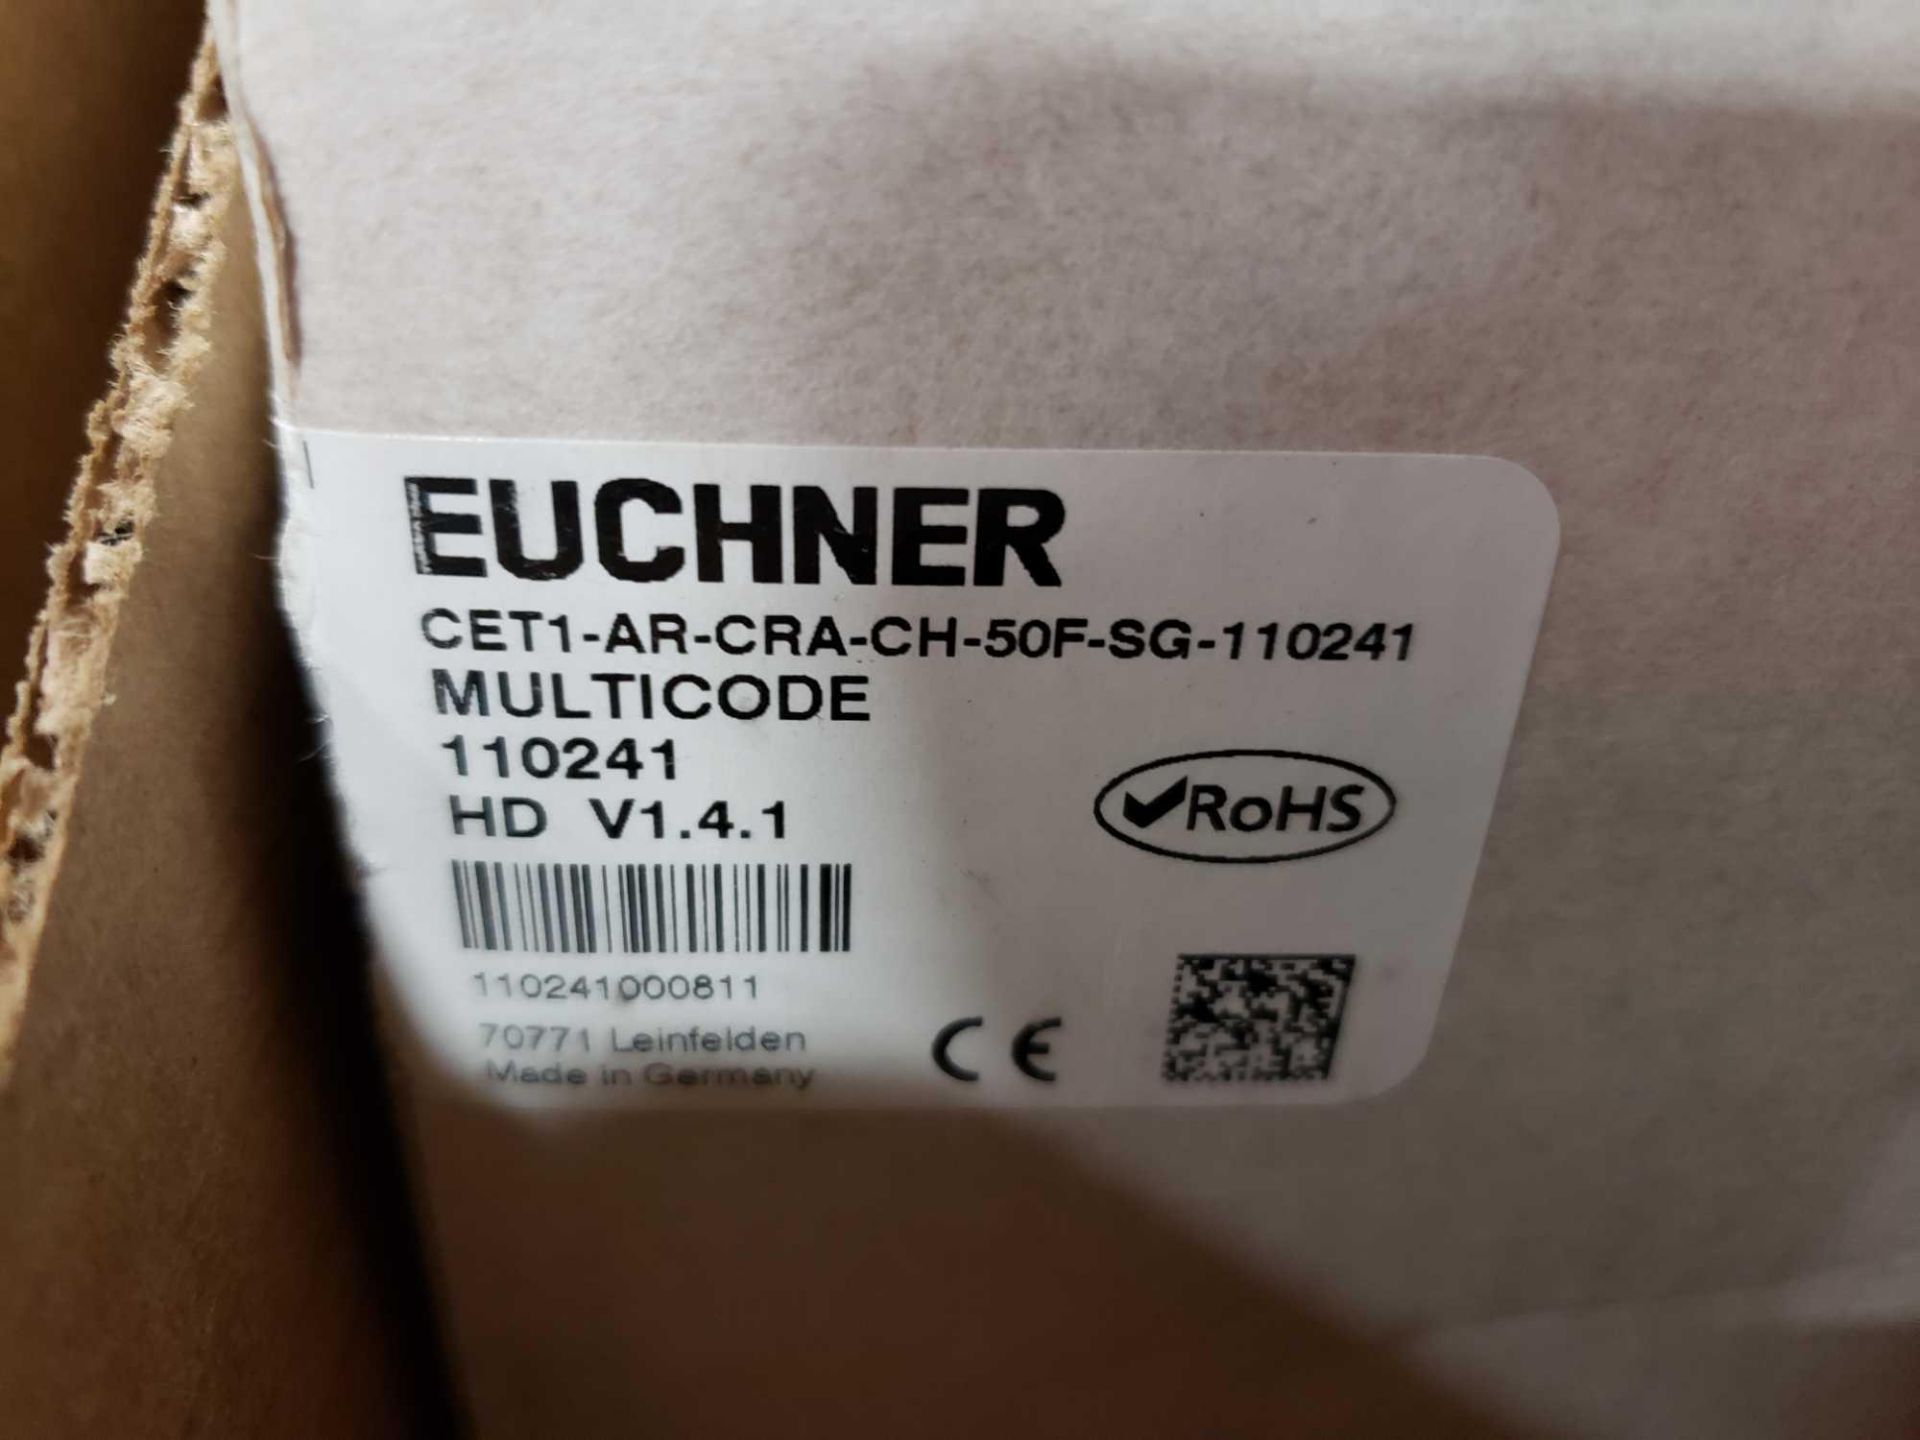 Euchner model CET1-AR-CRA-CH-50F-SG-110241. New in box. - Image 3 of 4